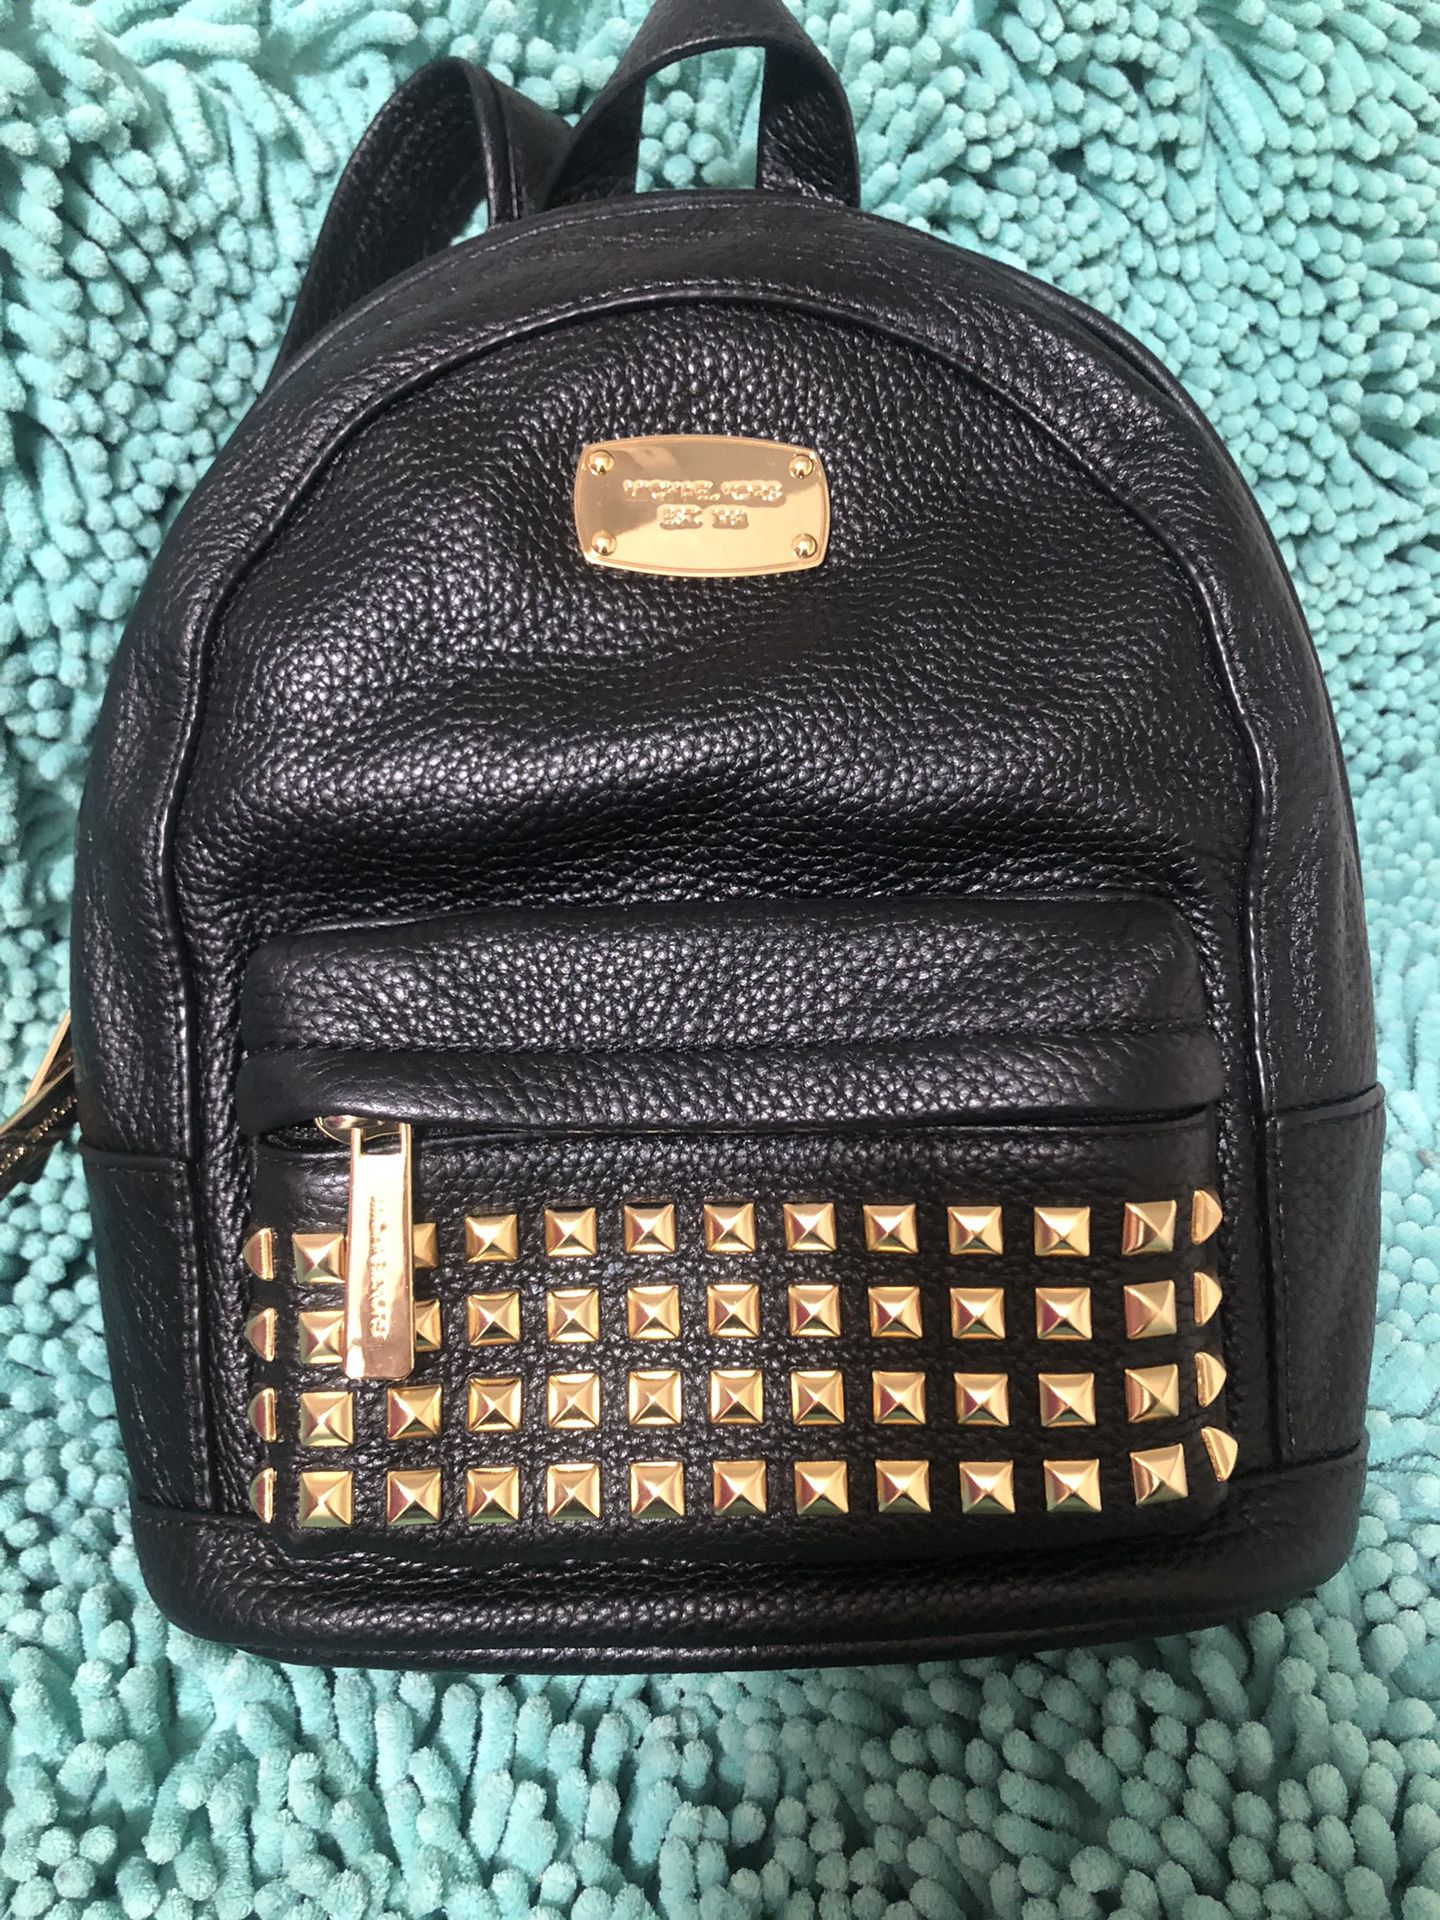 Michael Kors Gold Studded Black Backpack for Sale in Phoenix, AZ - OfferUp